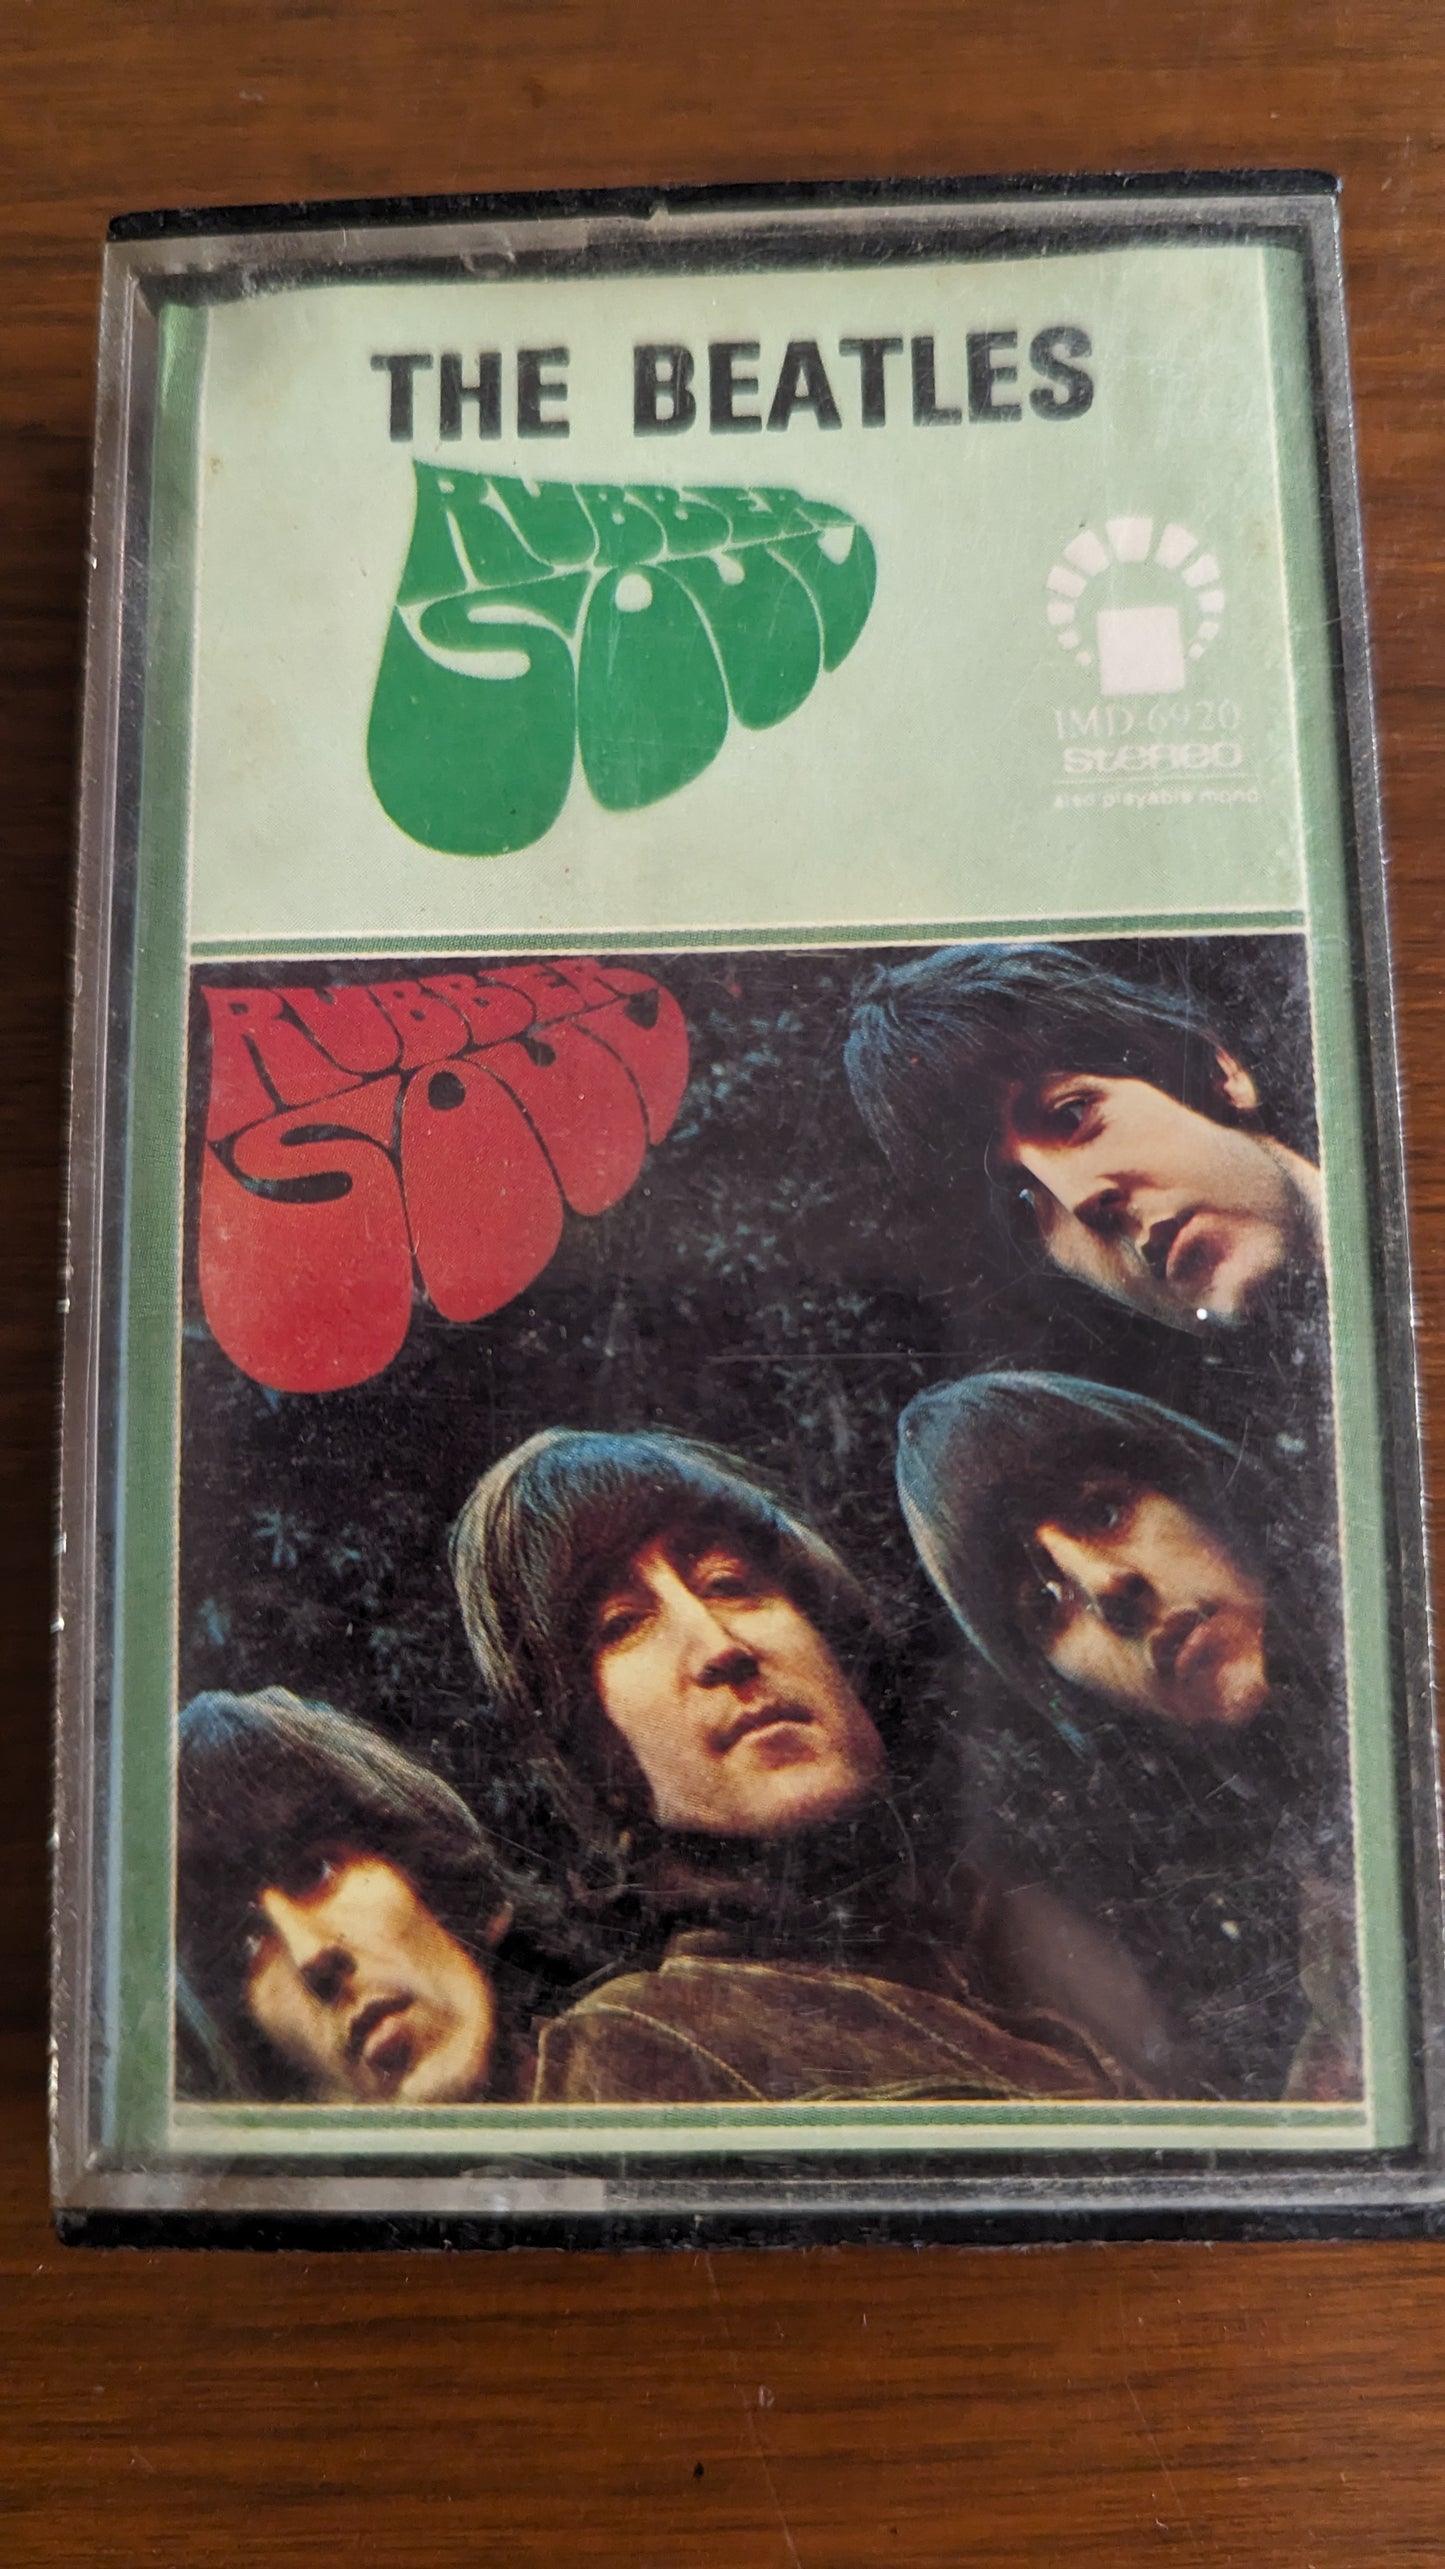 The Beatles Rubber Soul Cassette Tape